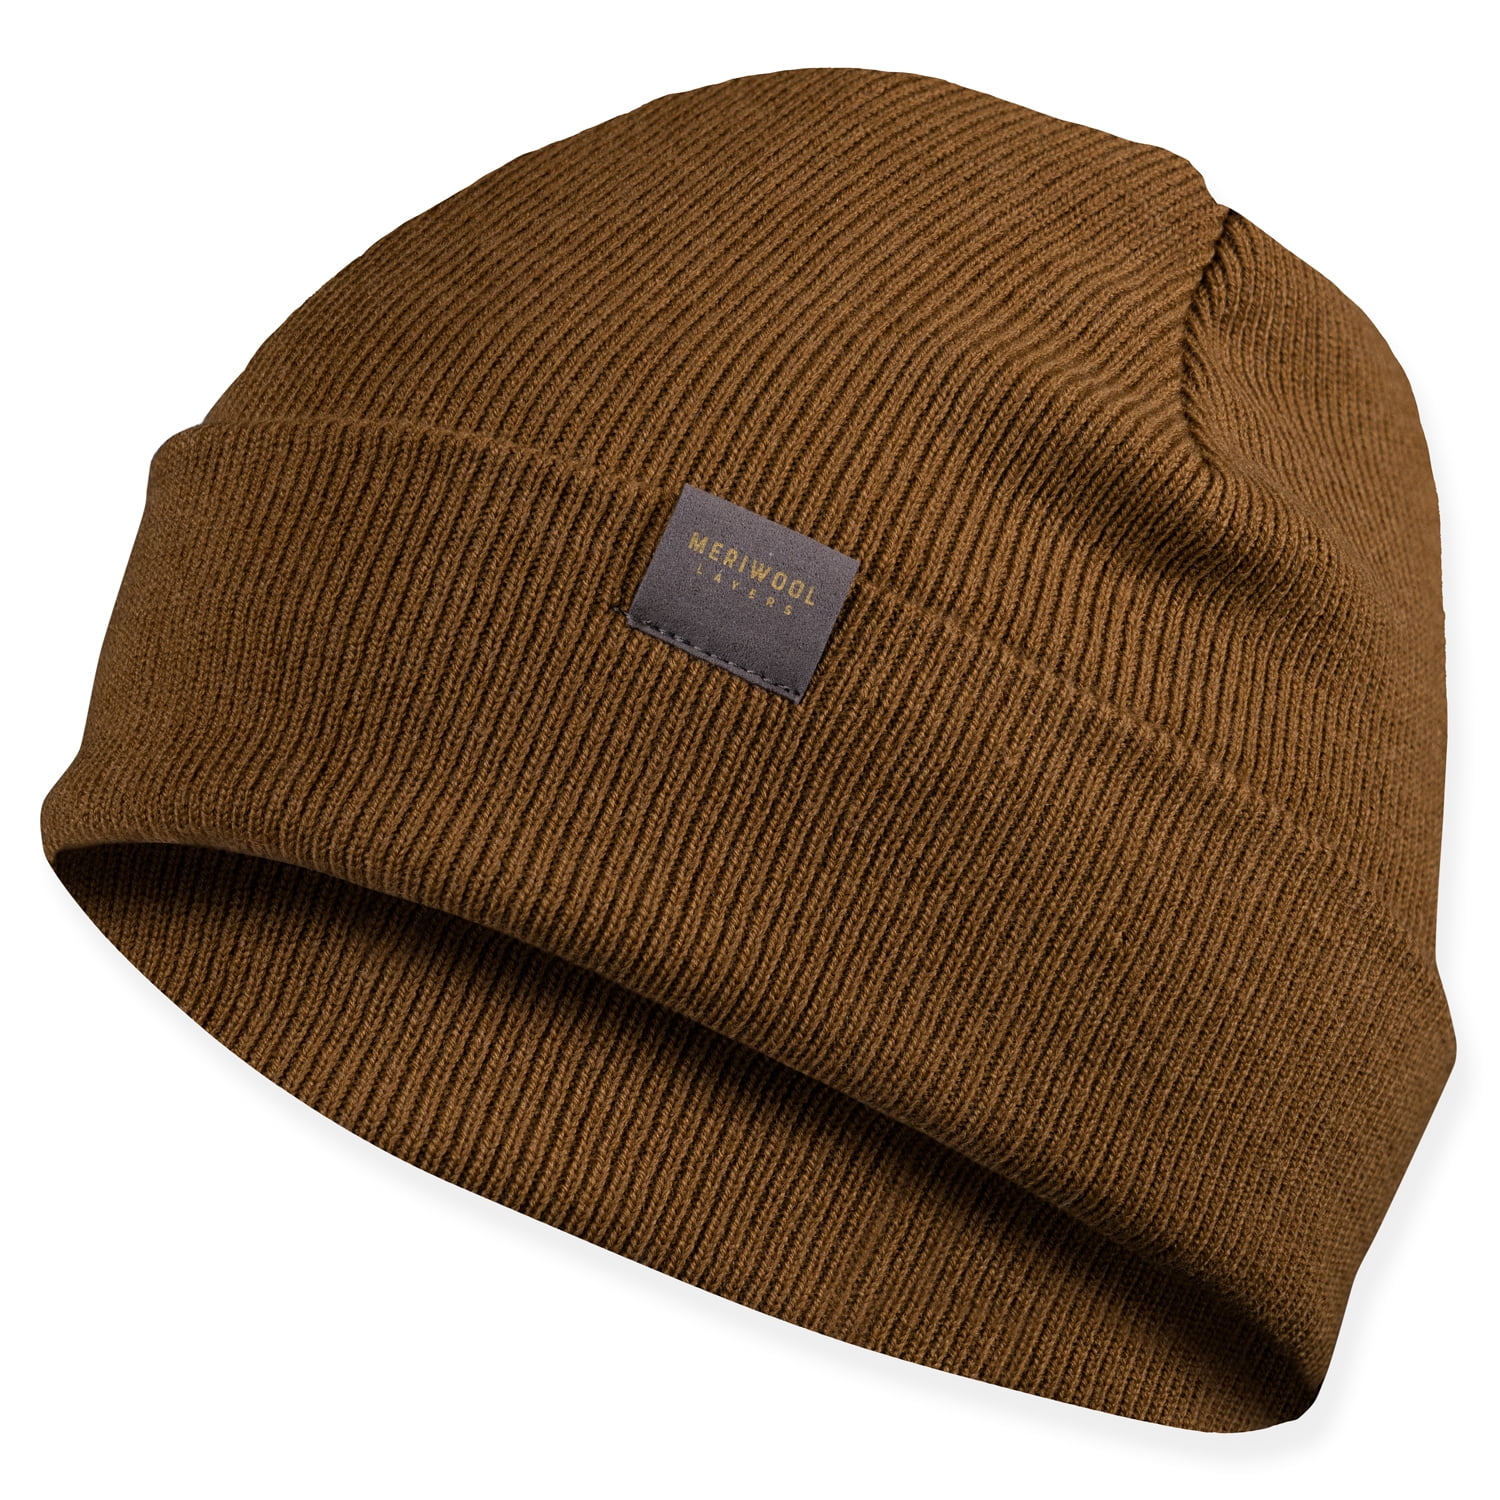 MERIWOOL Unisex Beanie Hat - Winter Knit for Merino and Ribbed Wool Men Women